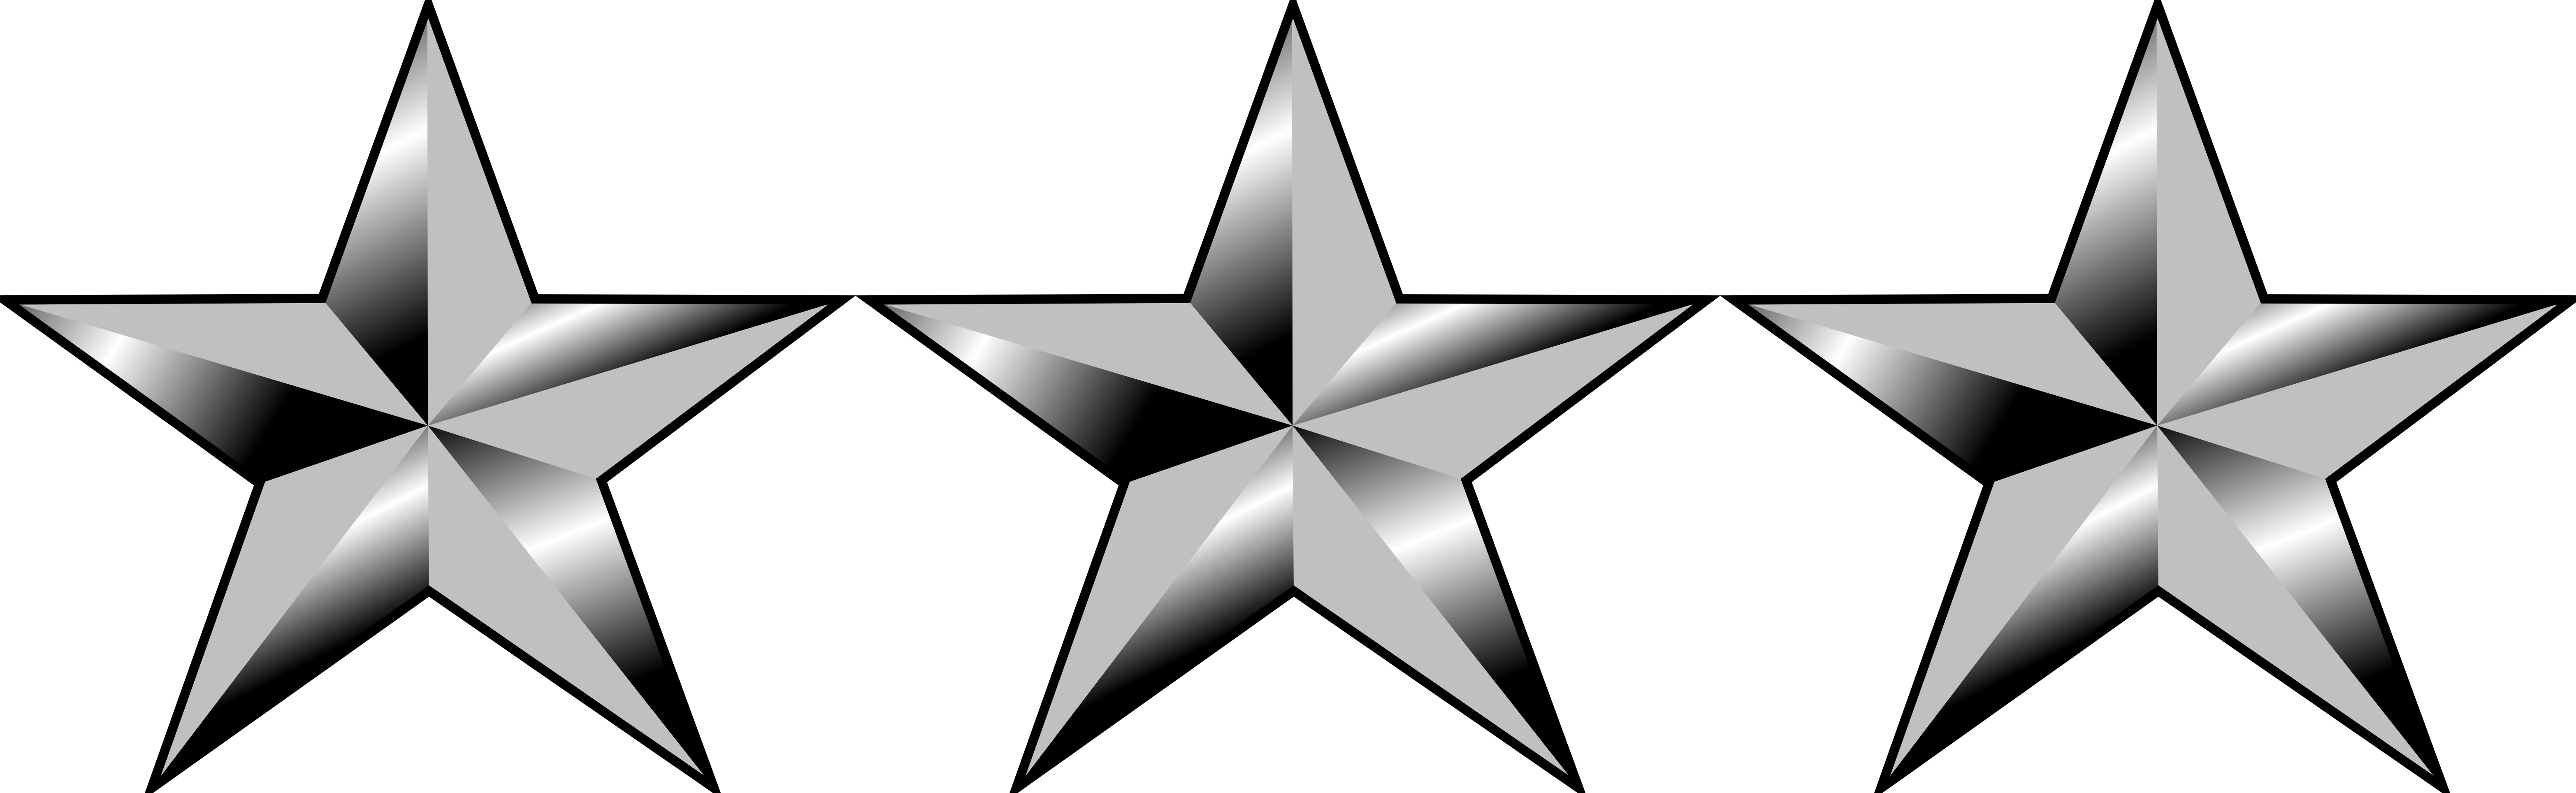 Vice Admiral - 3 Star General Rank (6262x1928)